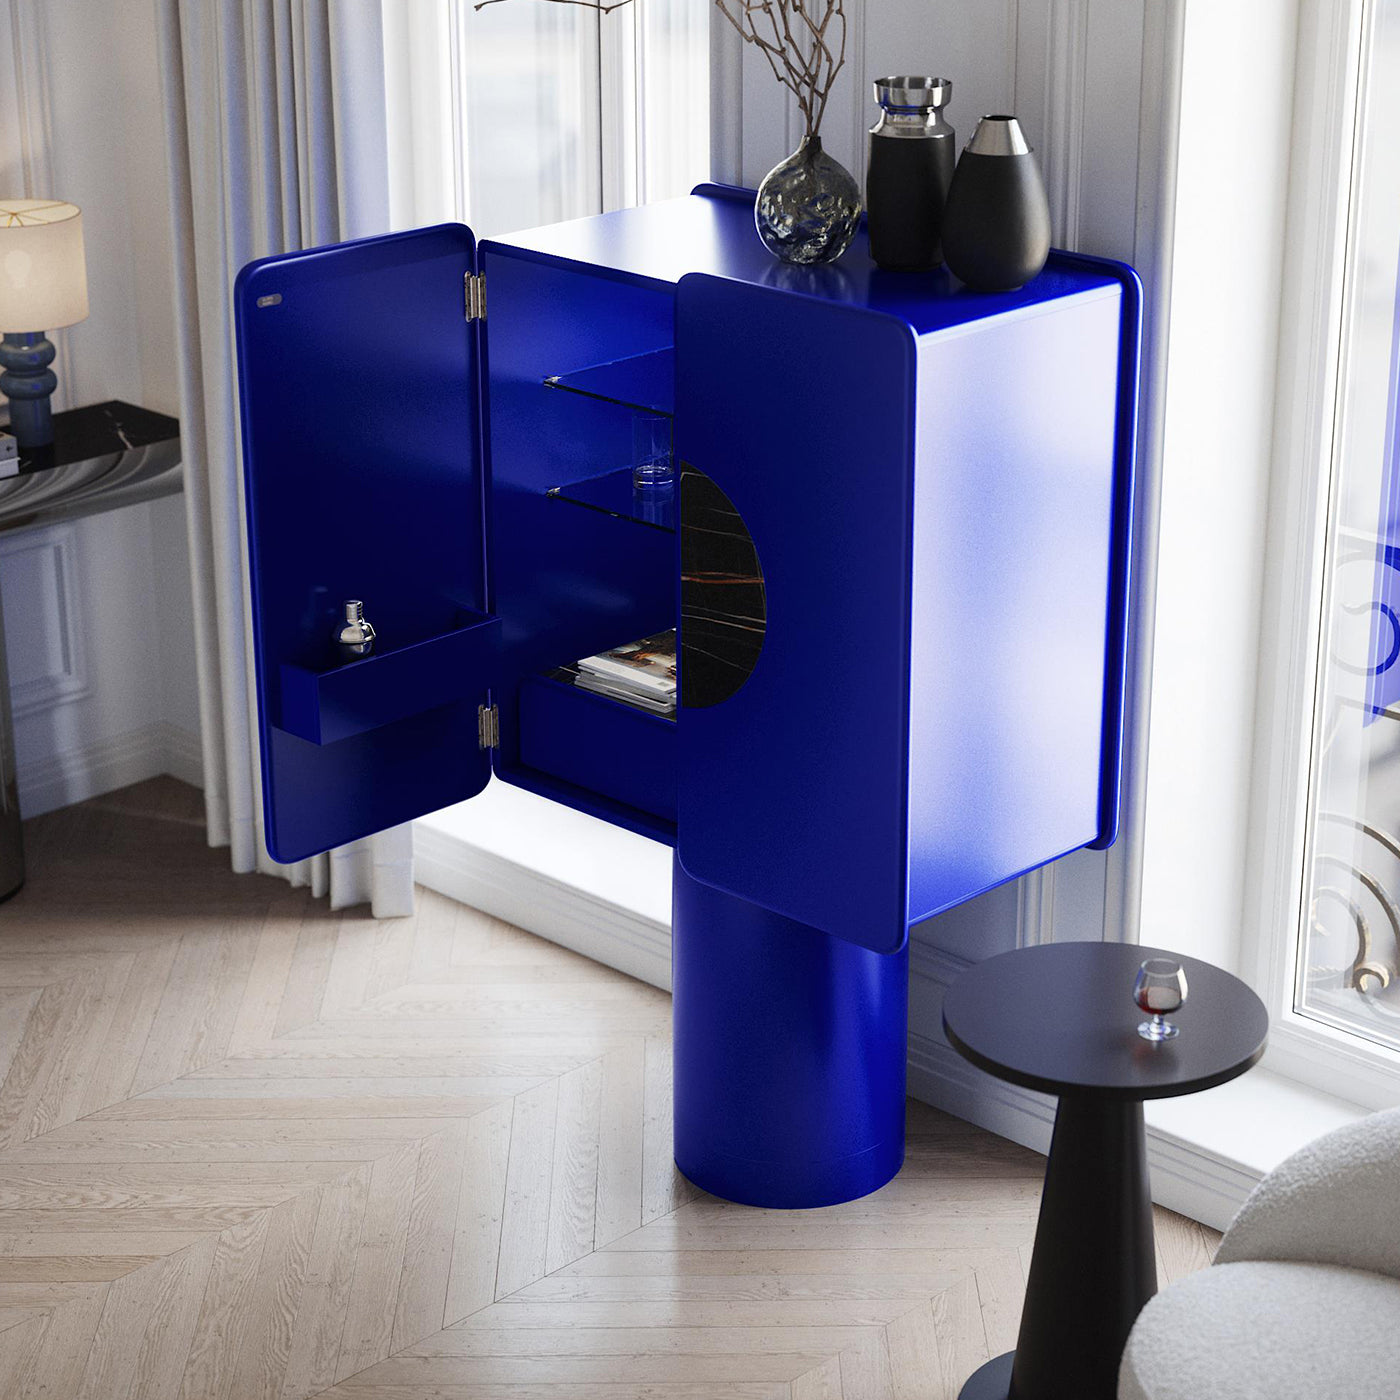 Regis 2-Door Ultramarine-Blue Bar Cabinet - Alternative view 3